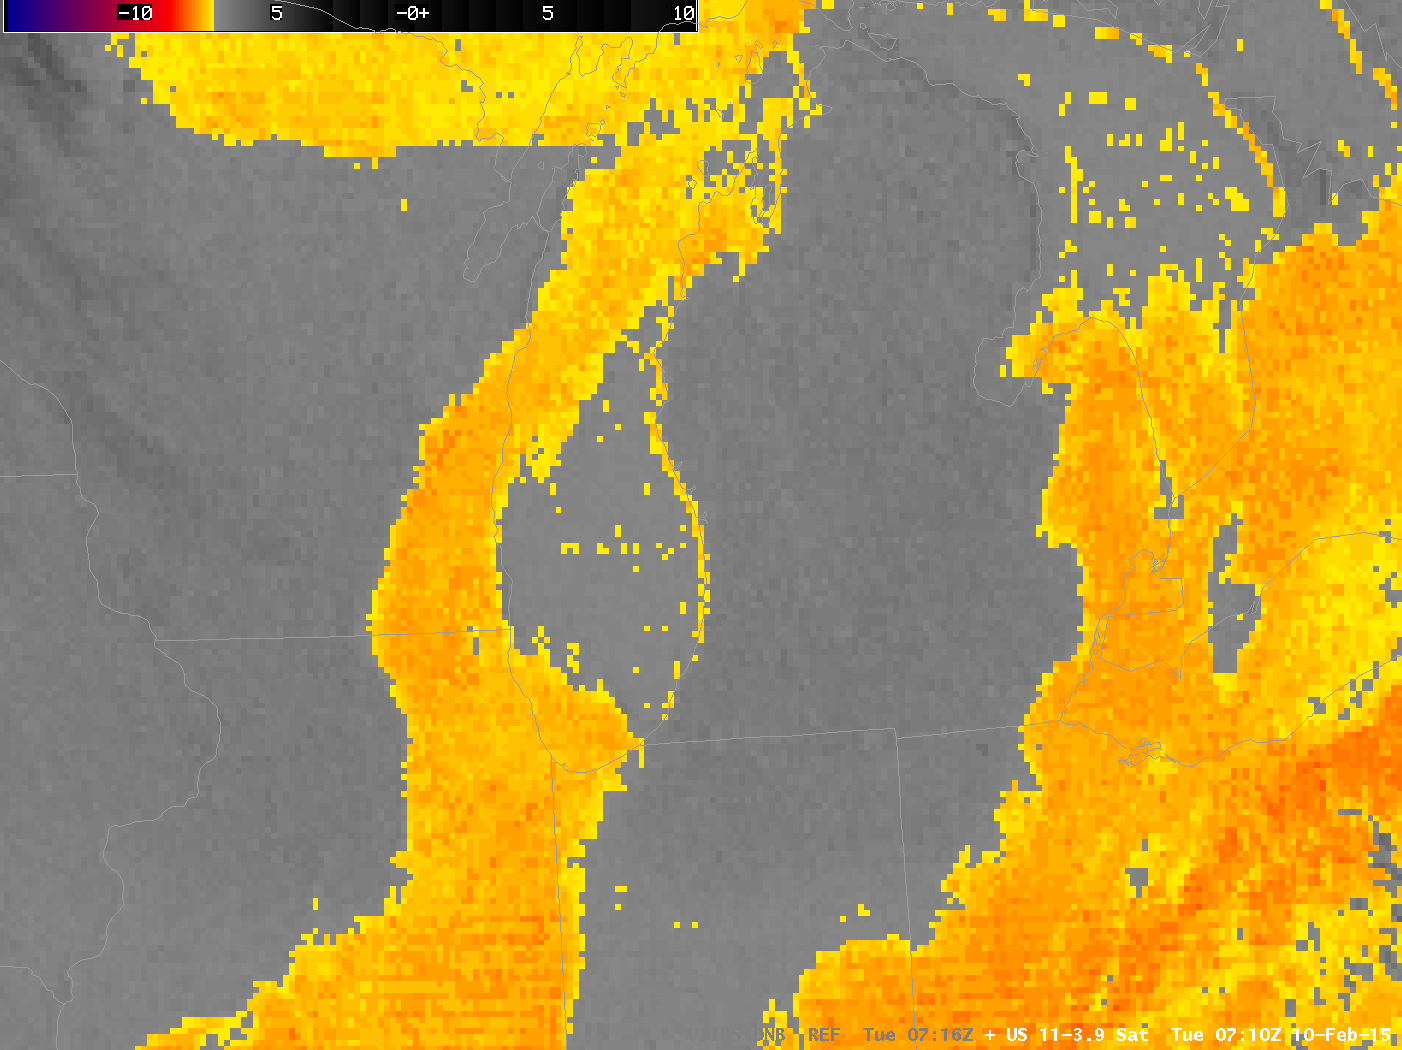 GOES-13 Brightness Temperature Difference (10.7 µm - 3.9 µm), Suomi NPP Day Night Band (0.70 µm) and Suomi NPP Brightness Temperature Difference (11.35 µm - 3.74 µm), 10 February 2015, 0715 UTC (Click to animate)